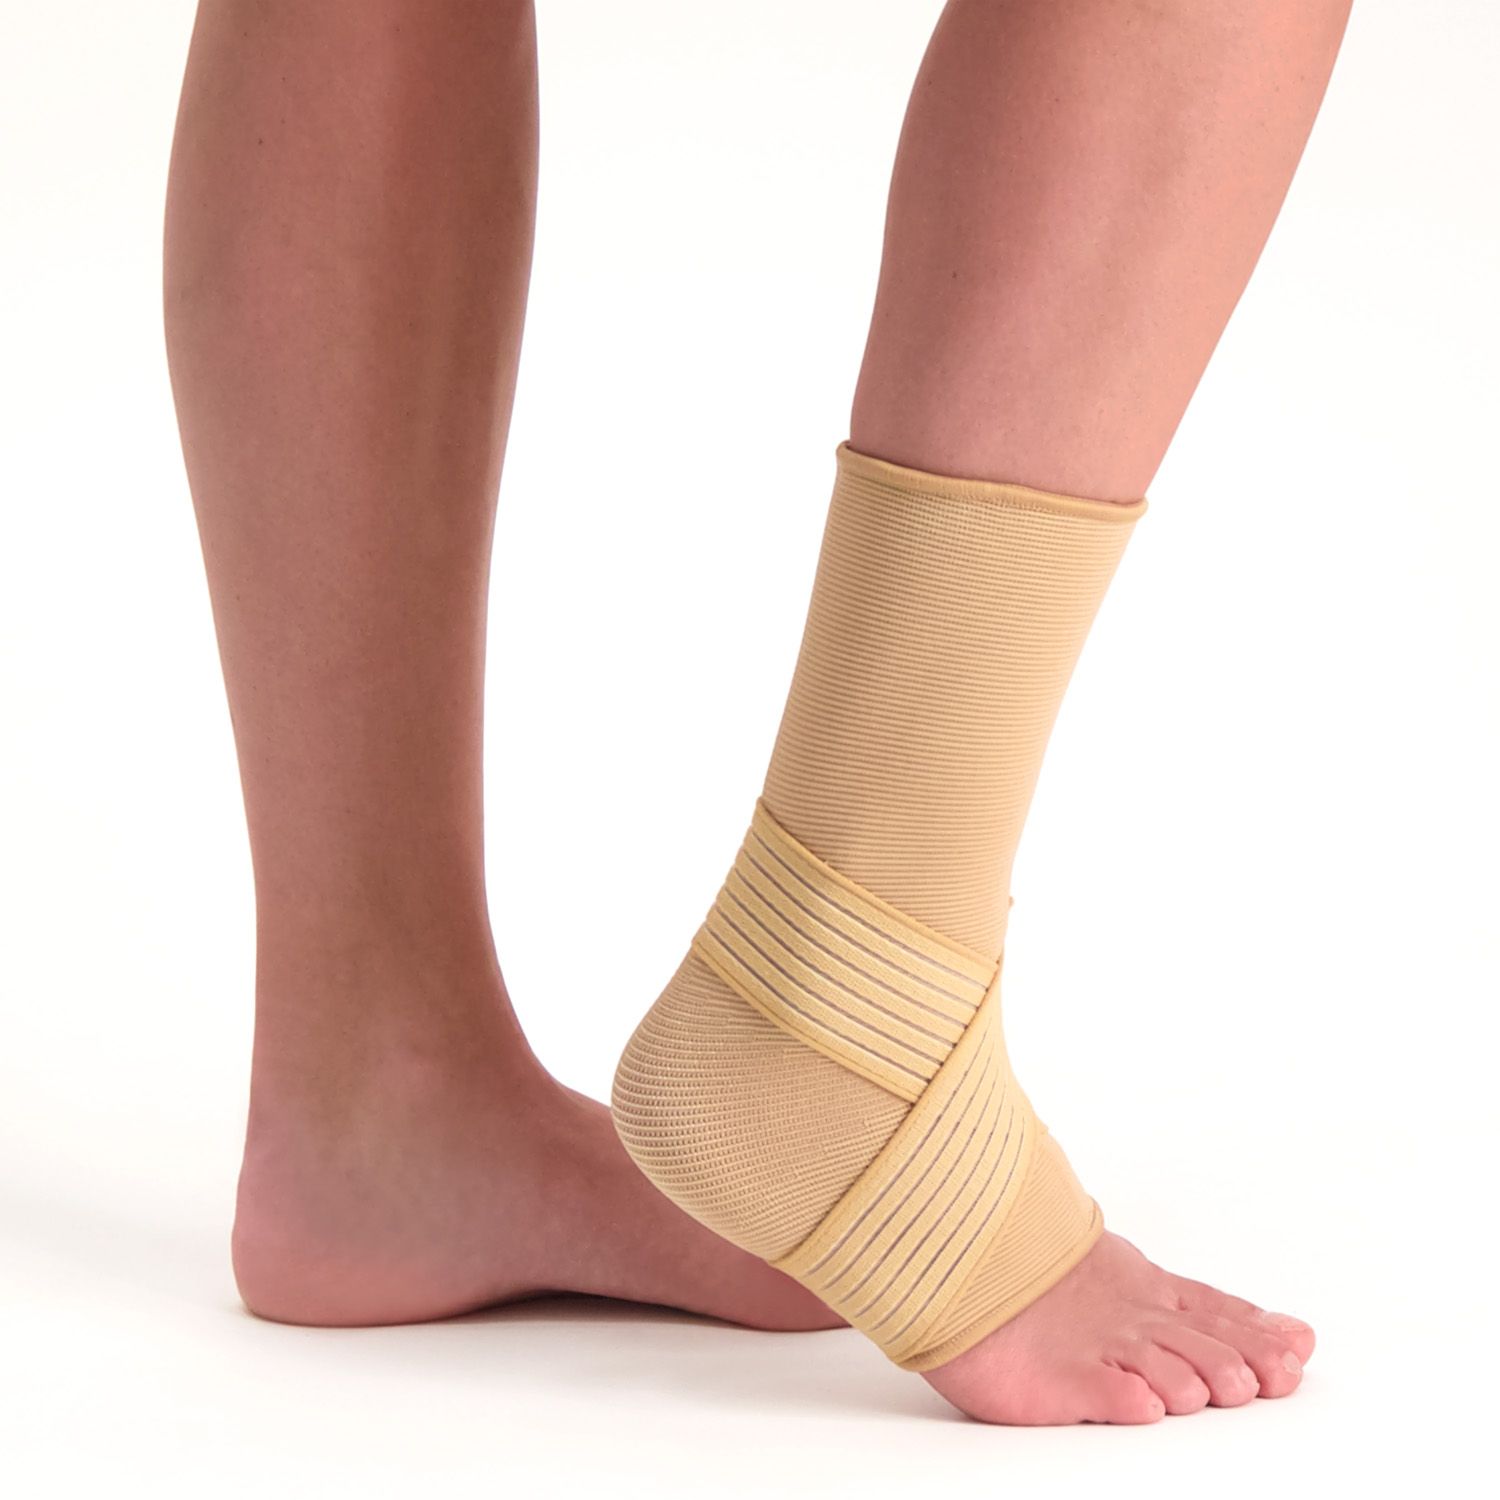 medidu premium ankle support Velcro straps shown